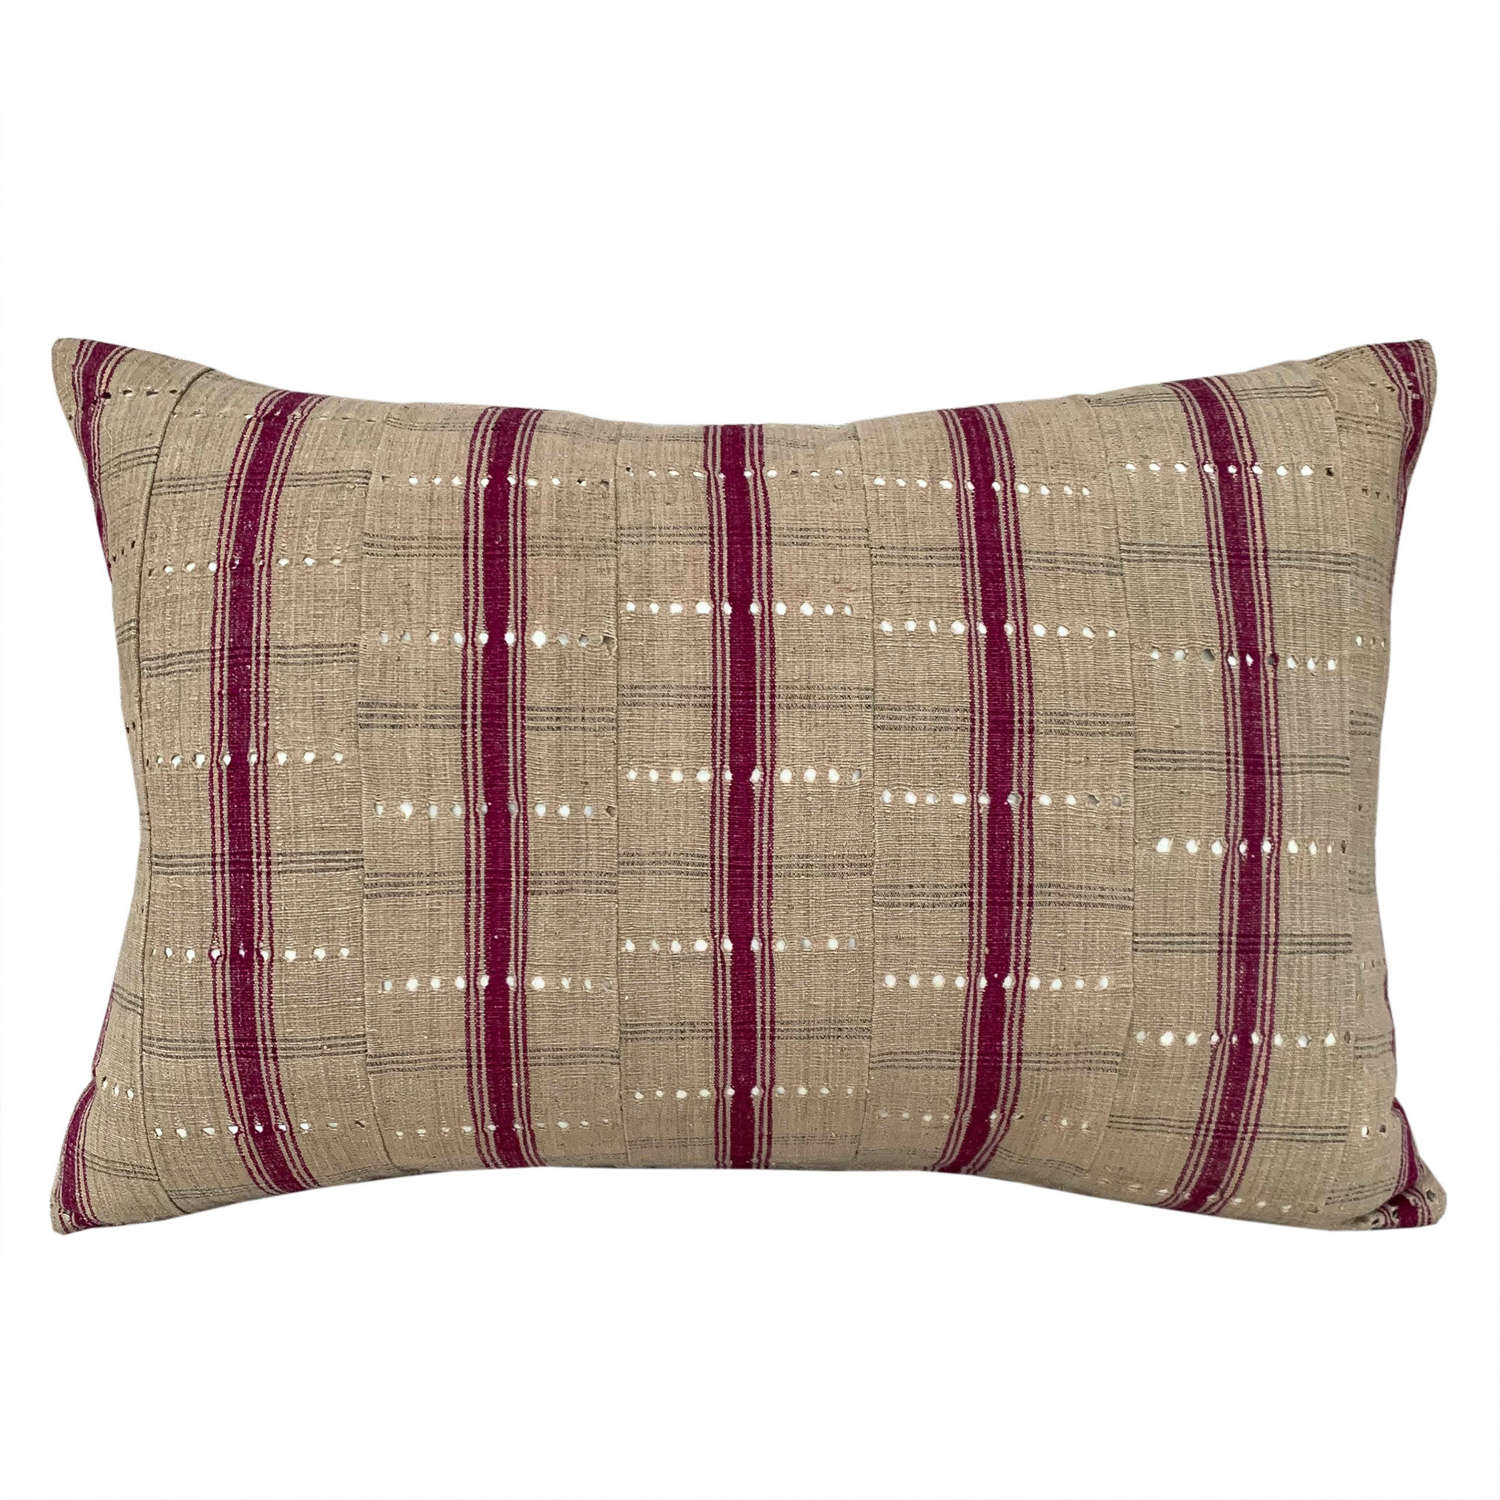 Yoruba cushion with berry stripes